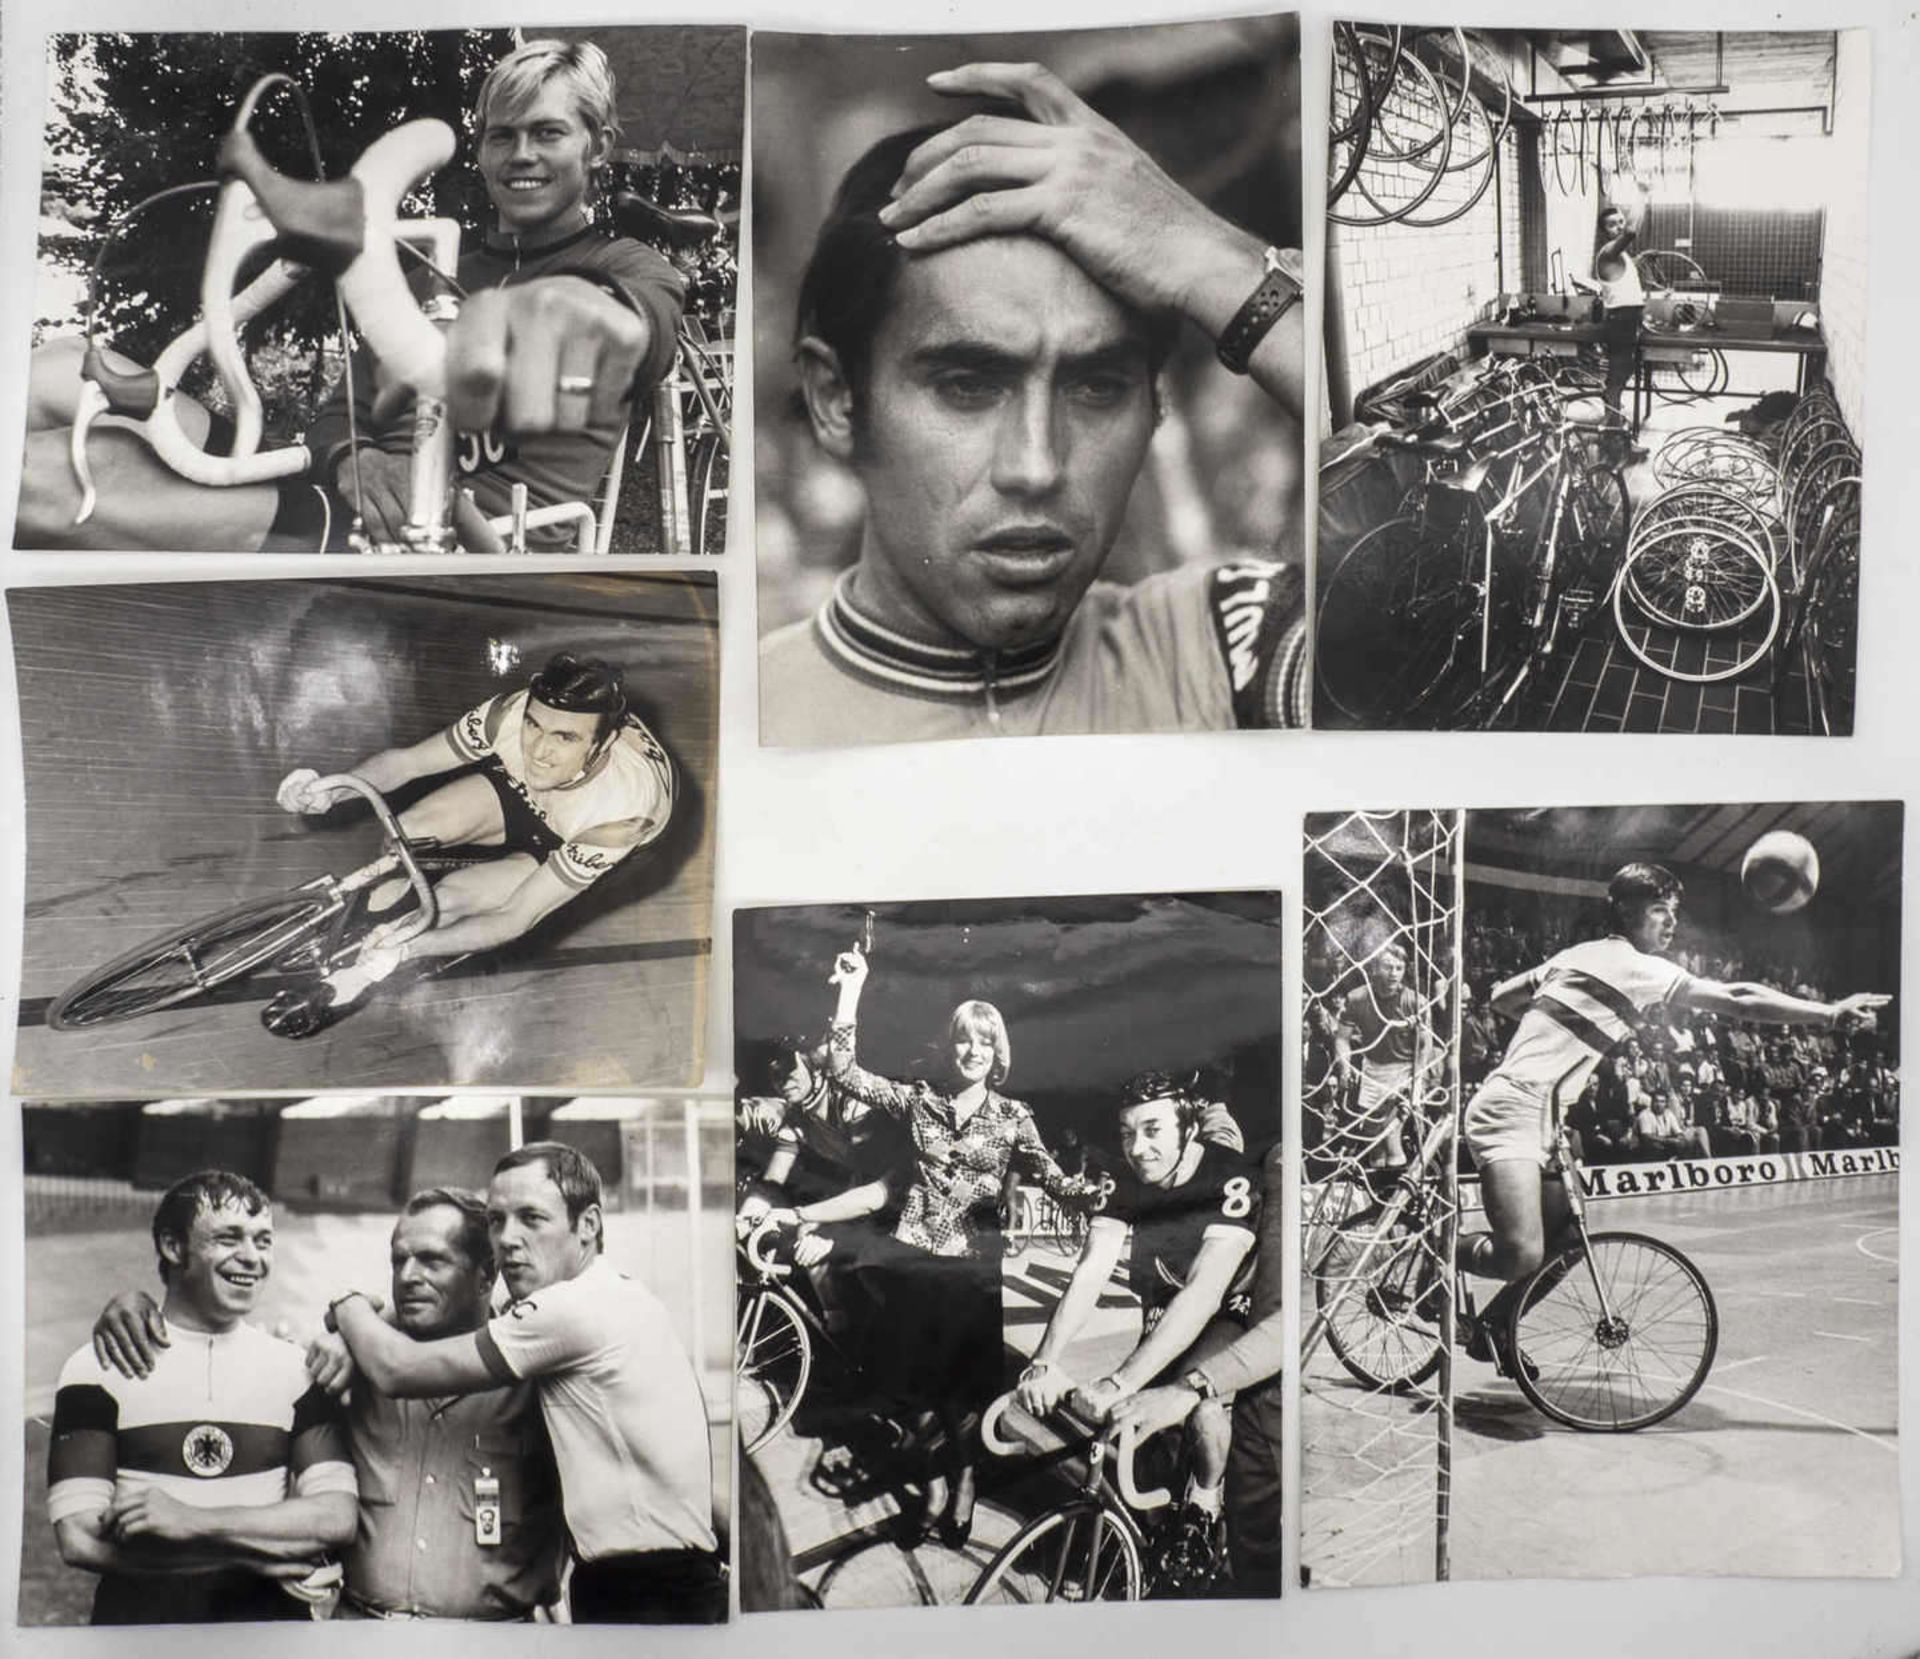 Lot 18 Pressefotos "Radrennfahrer" u. a. Eddy Merckx, Dietrich Thurau, Pater Post, Gregor Braun,